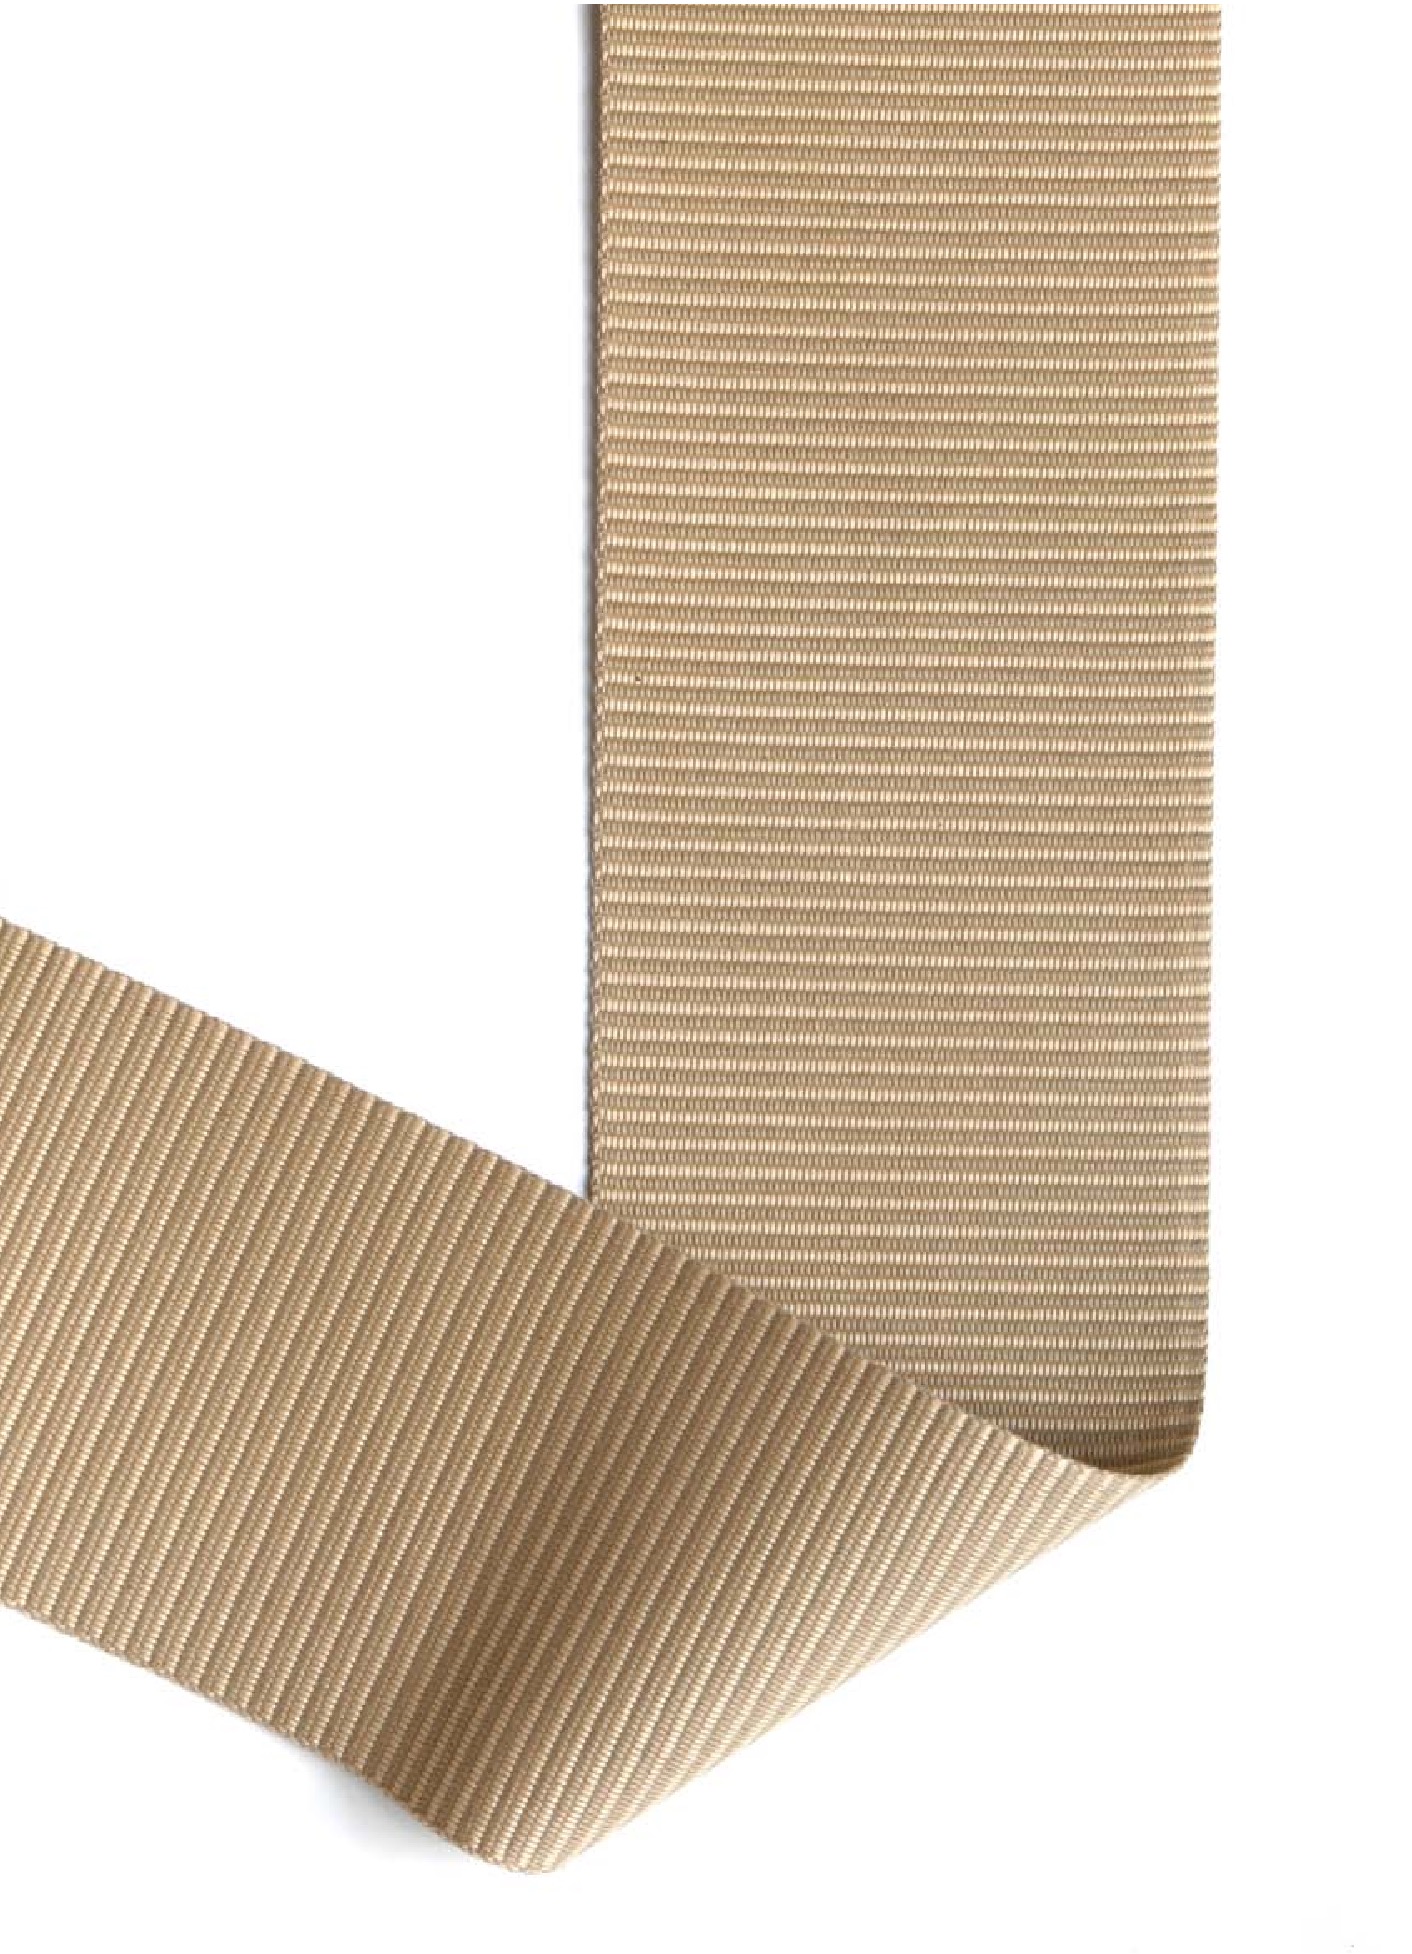 122mm Atlanta Carpet Tape (Cotton) – Millstek